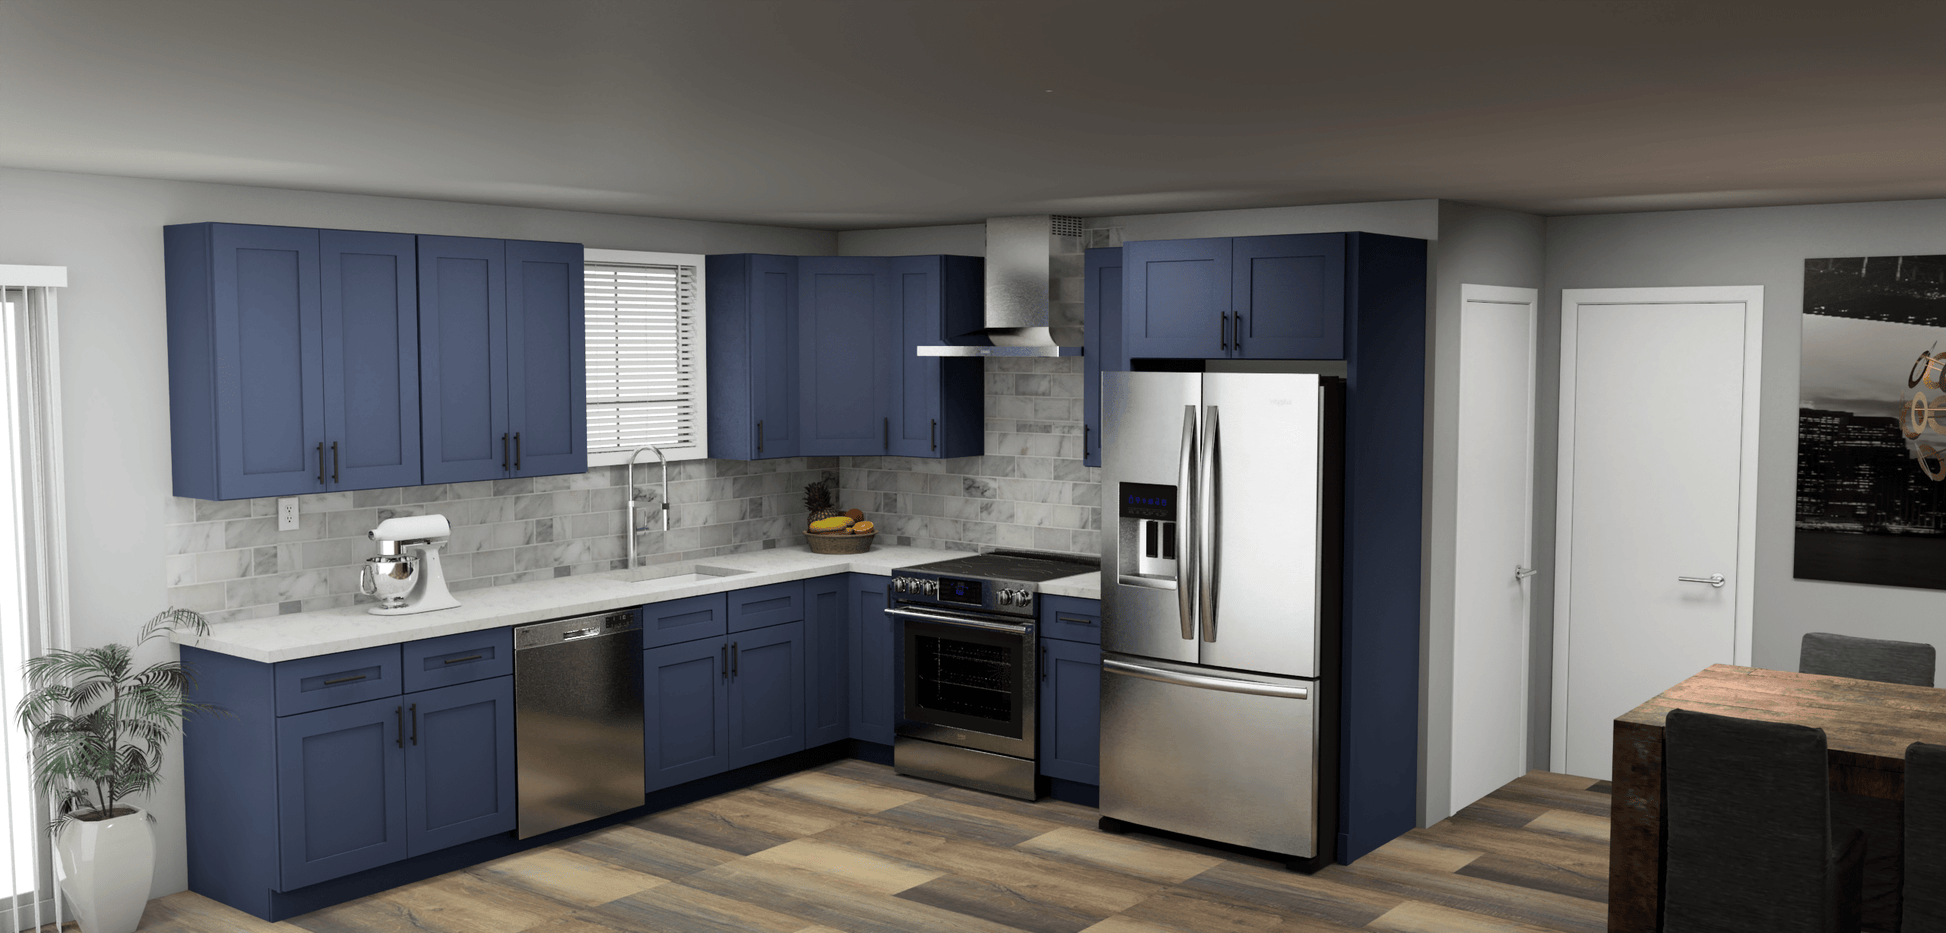 LessCare Danbury Blue 11 x 10 L Shaped Kitchen Main Layout Photo